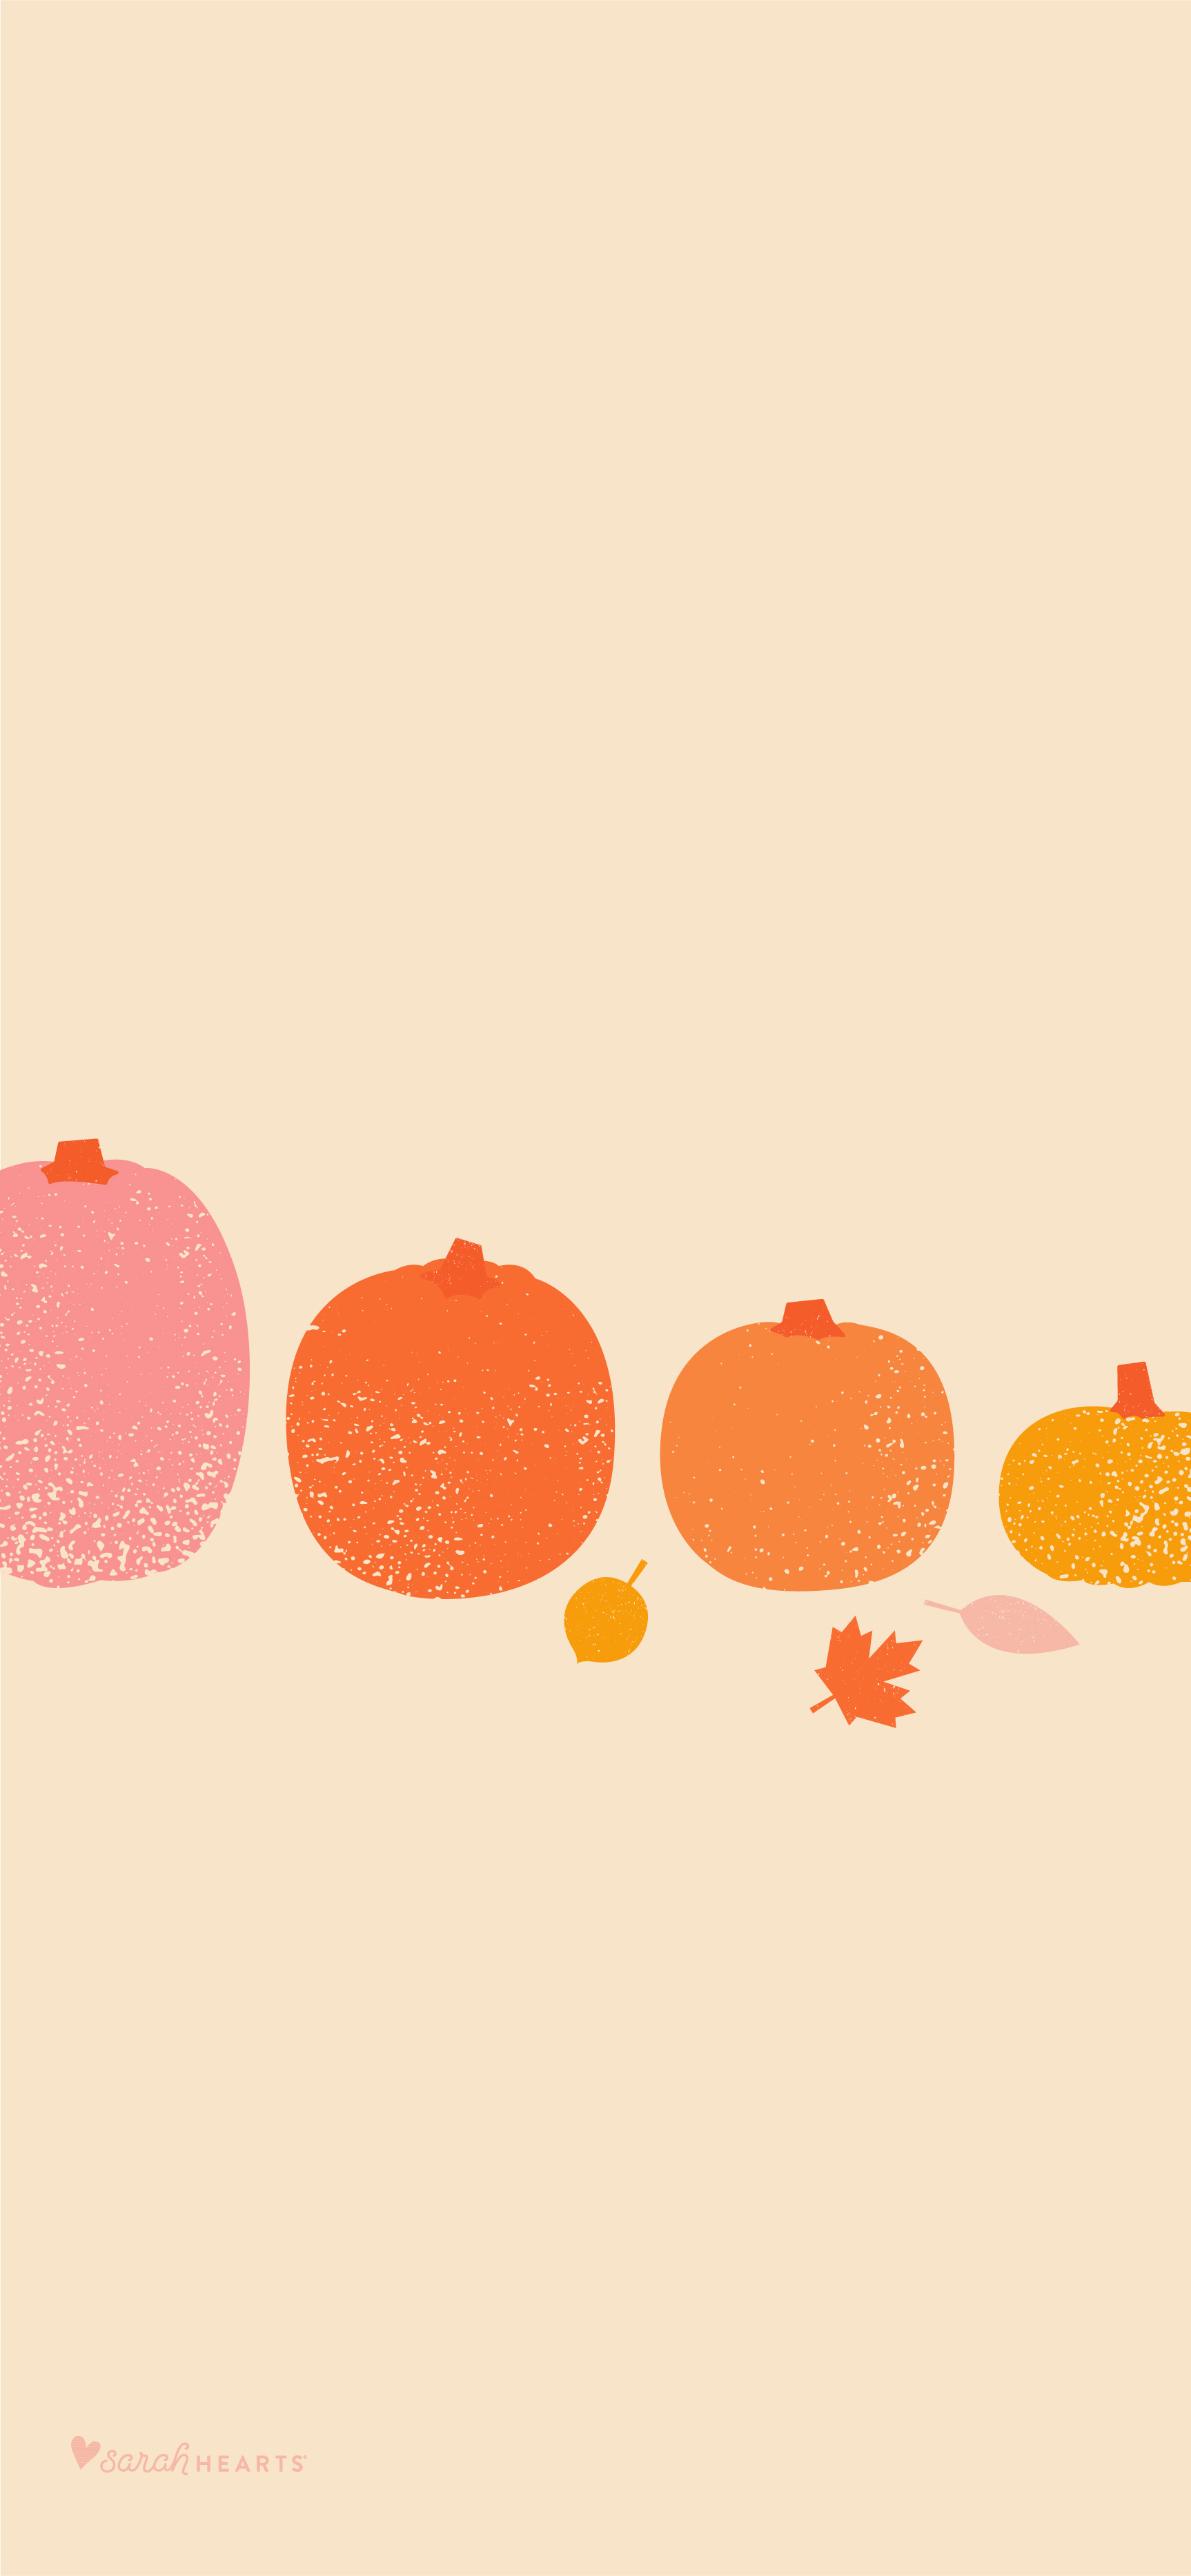 October 2019 Pumpkin Calendar Wallpaper - Sarah Hearts